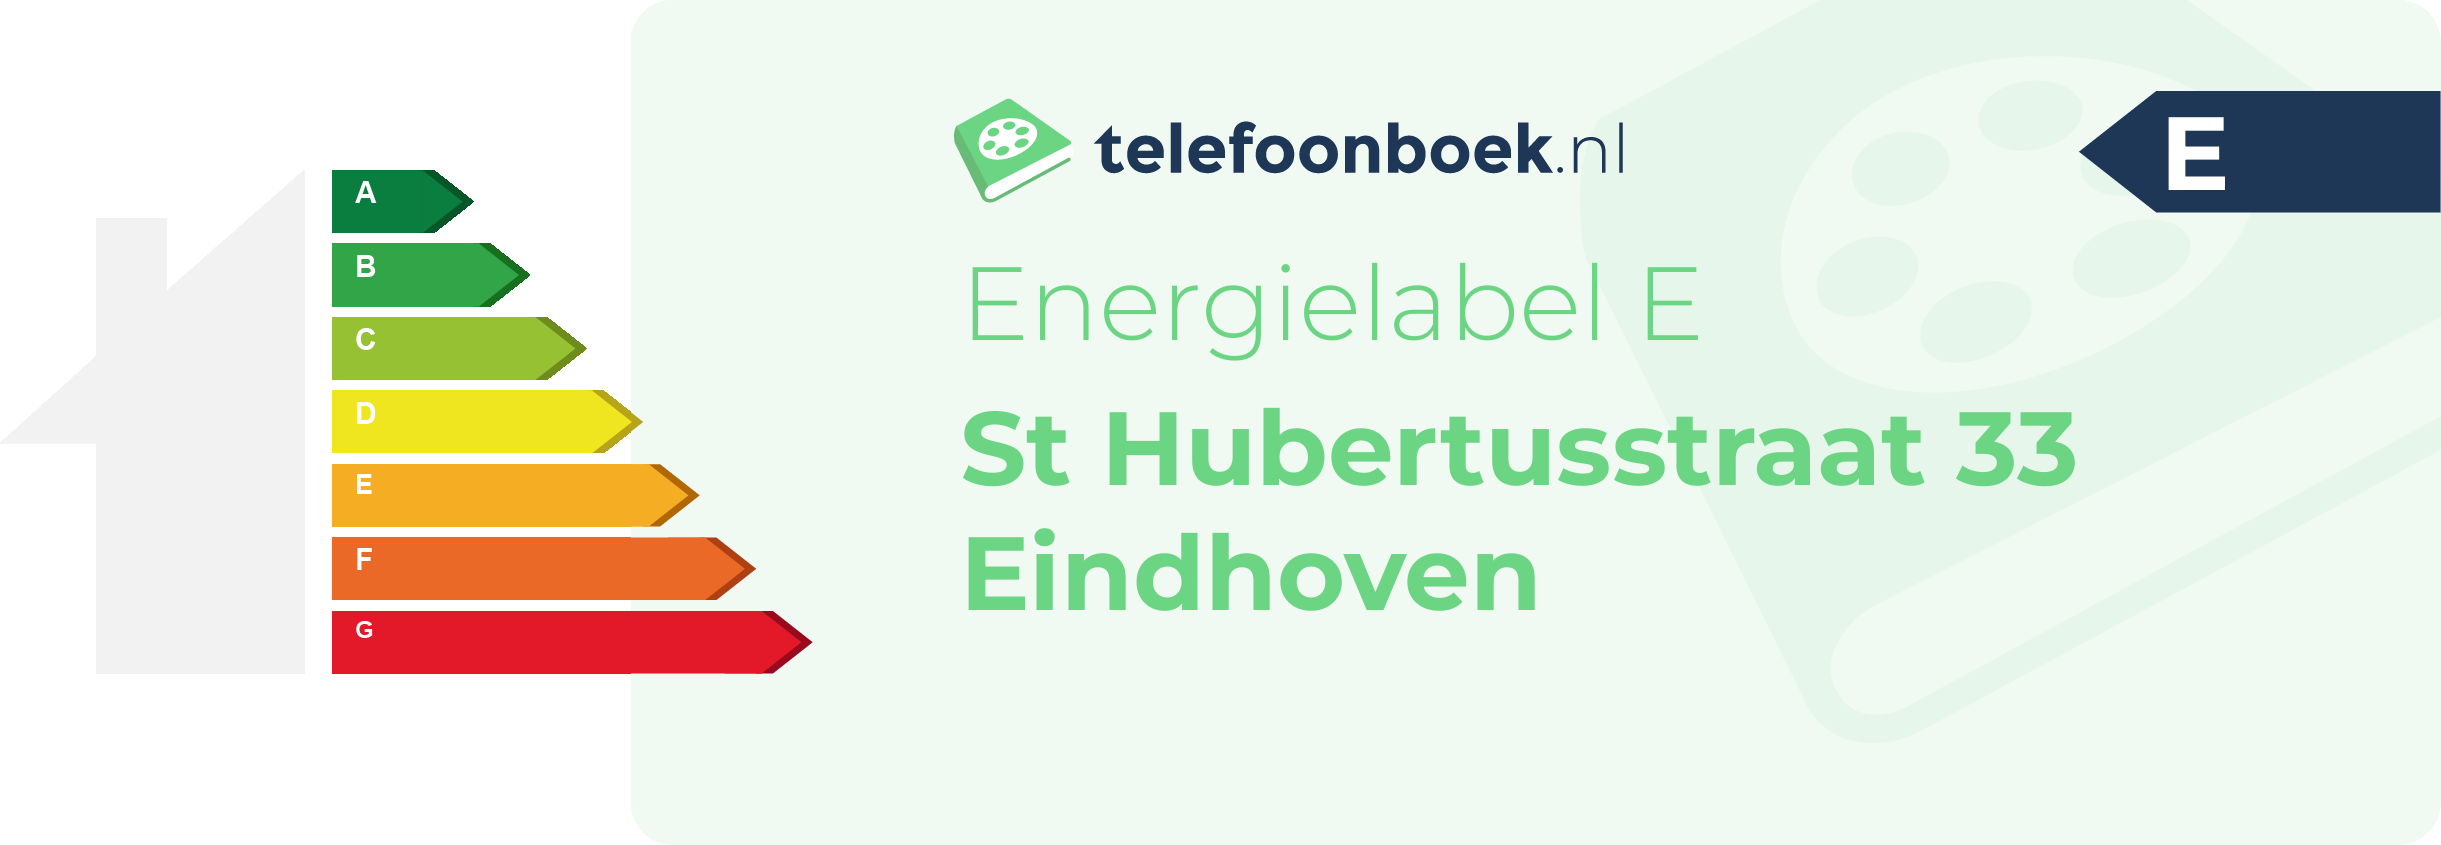 Energielabel St Hubertusstraat 33 Eindhoven